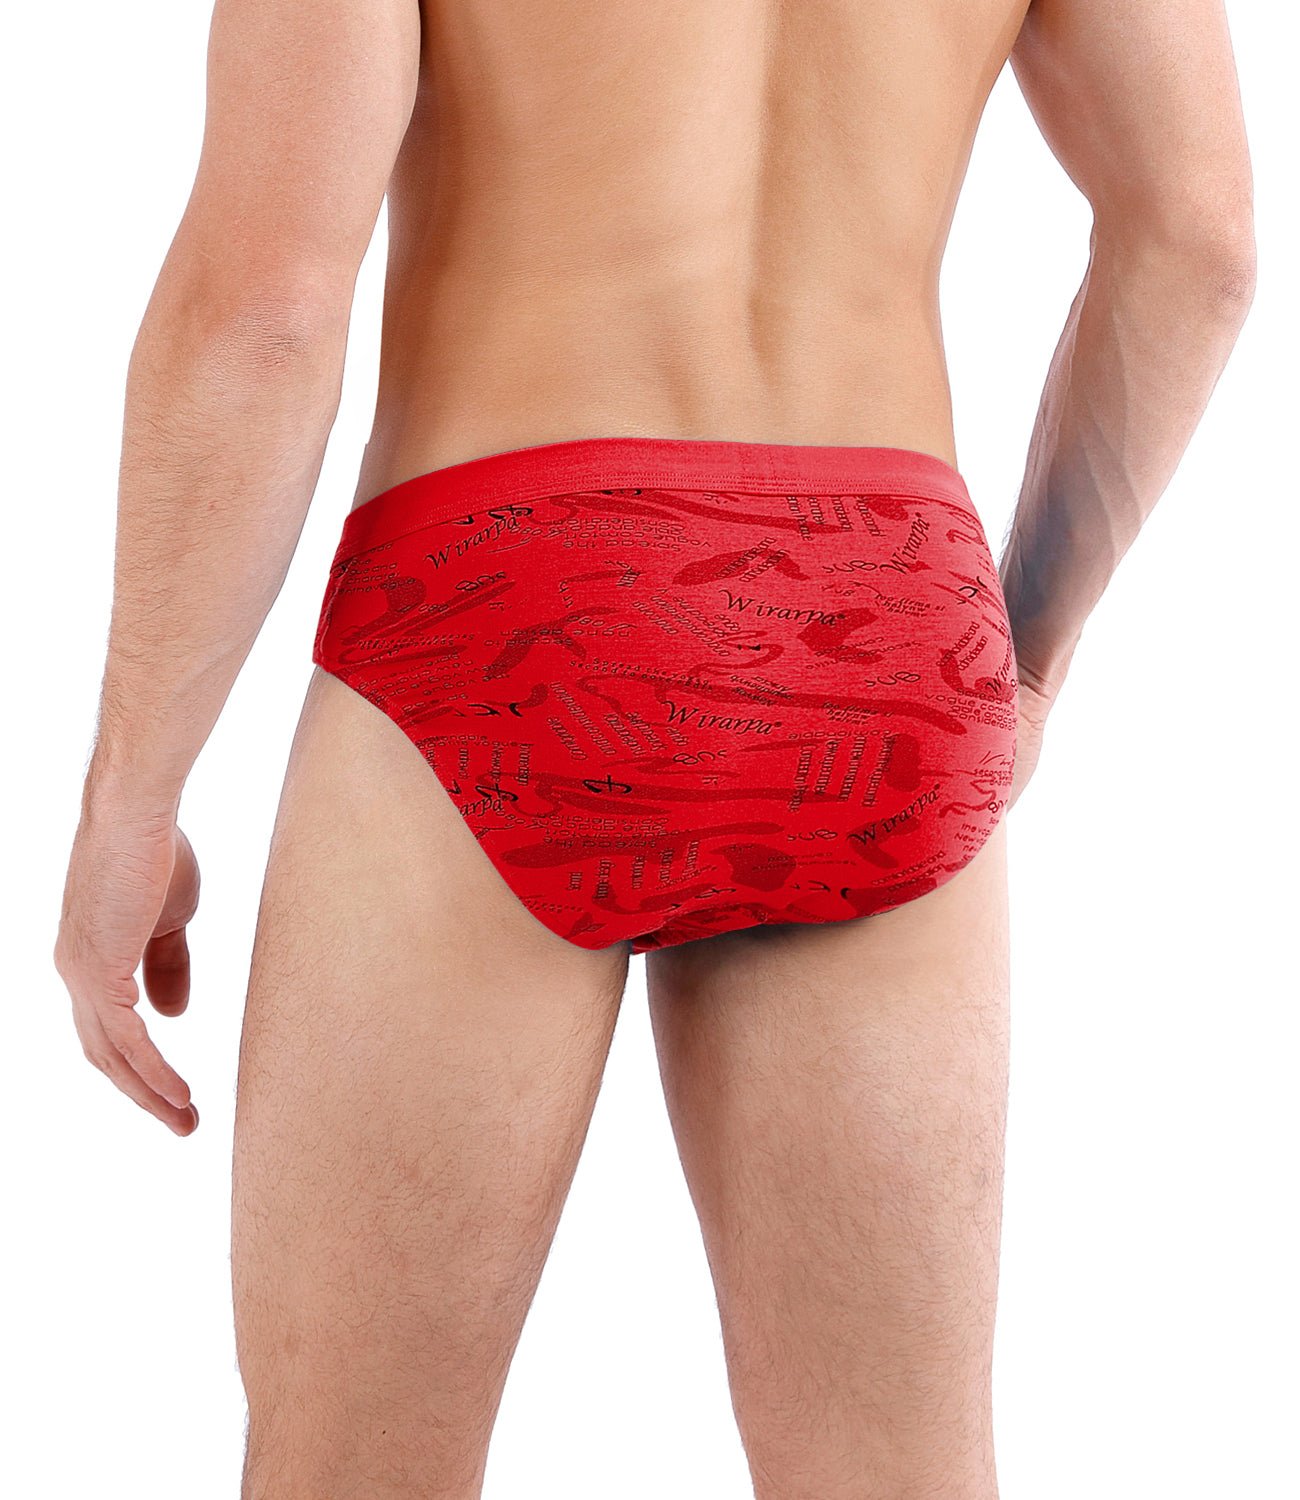 wirarpa Men's Modal Briefs Underwear Super Soft Microfibre Underpants No  Front